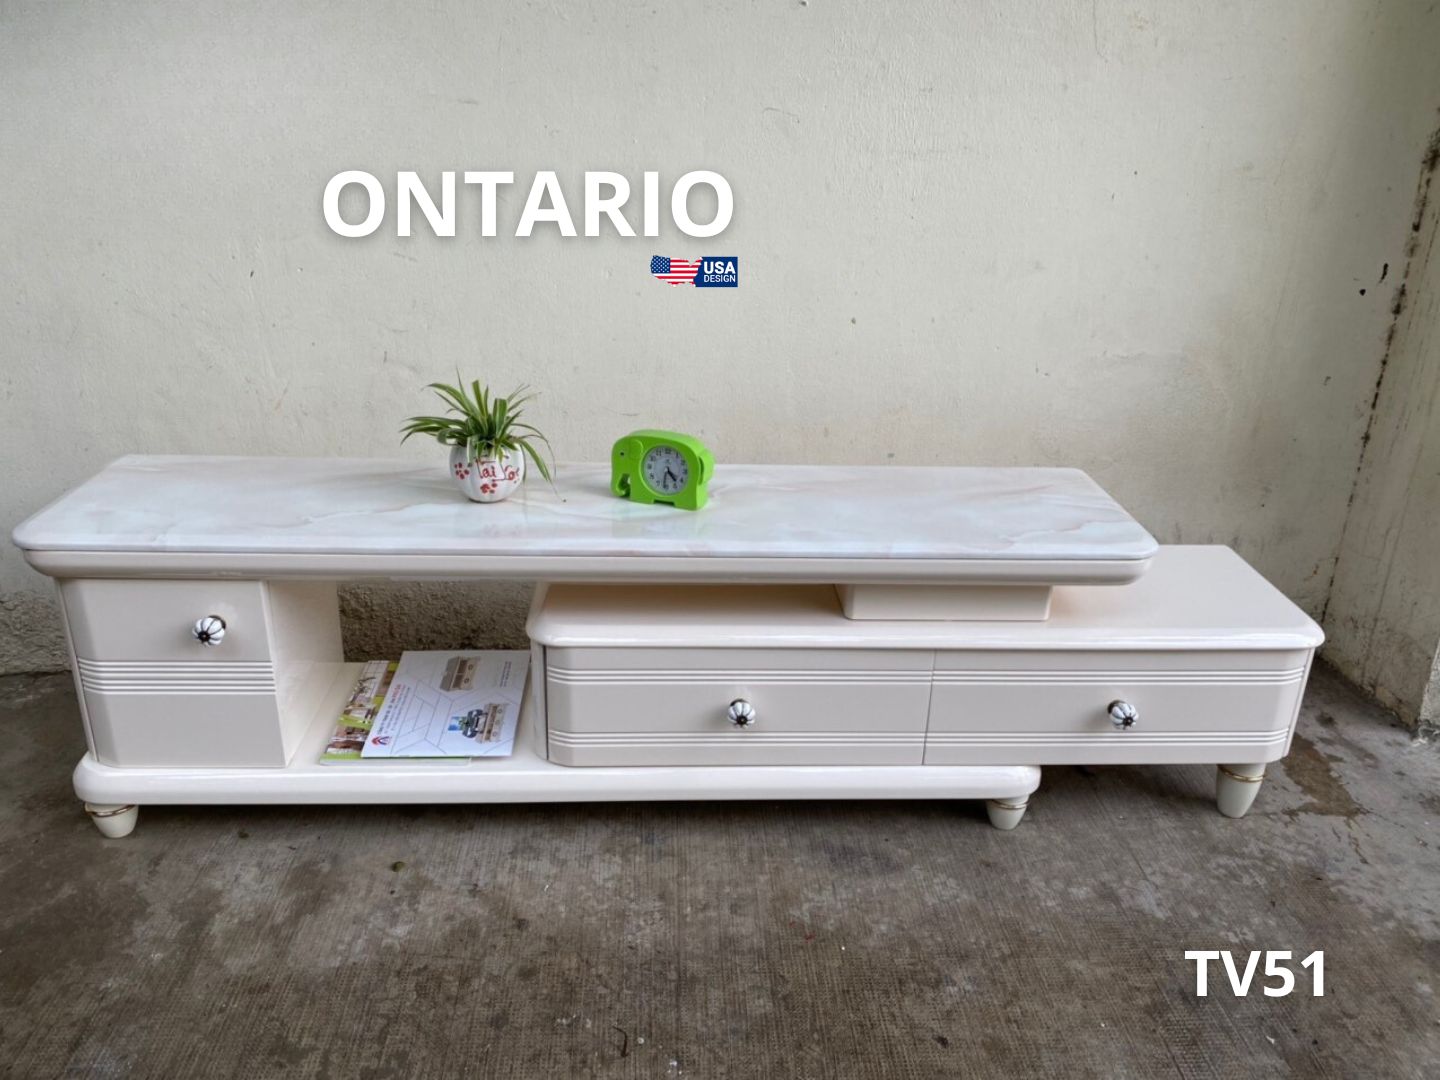 Kệ Tivi mặt đá TV51 Ontario nhập khẩu - Kệ TiVi - KenSOFA.vn